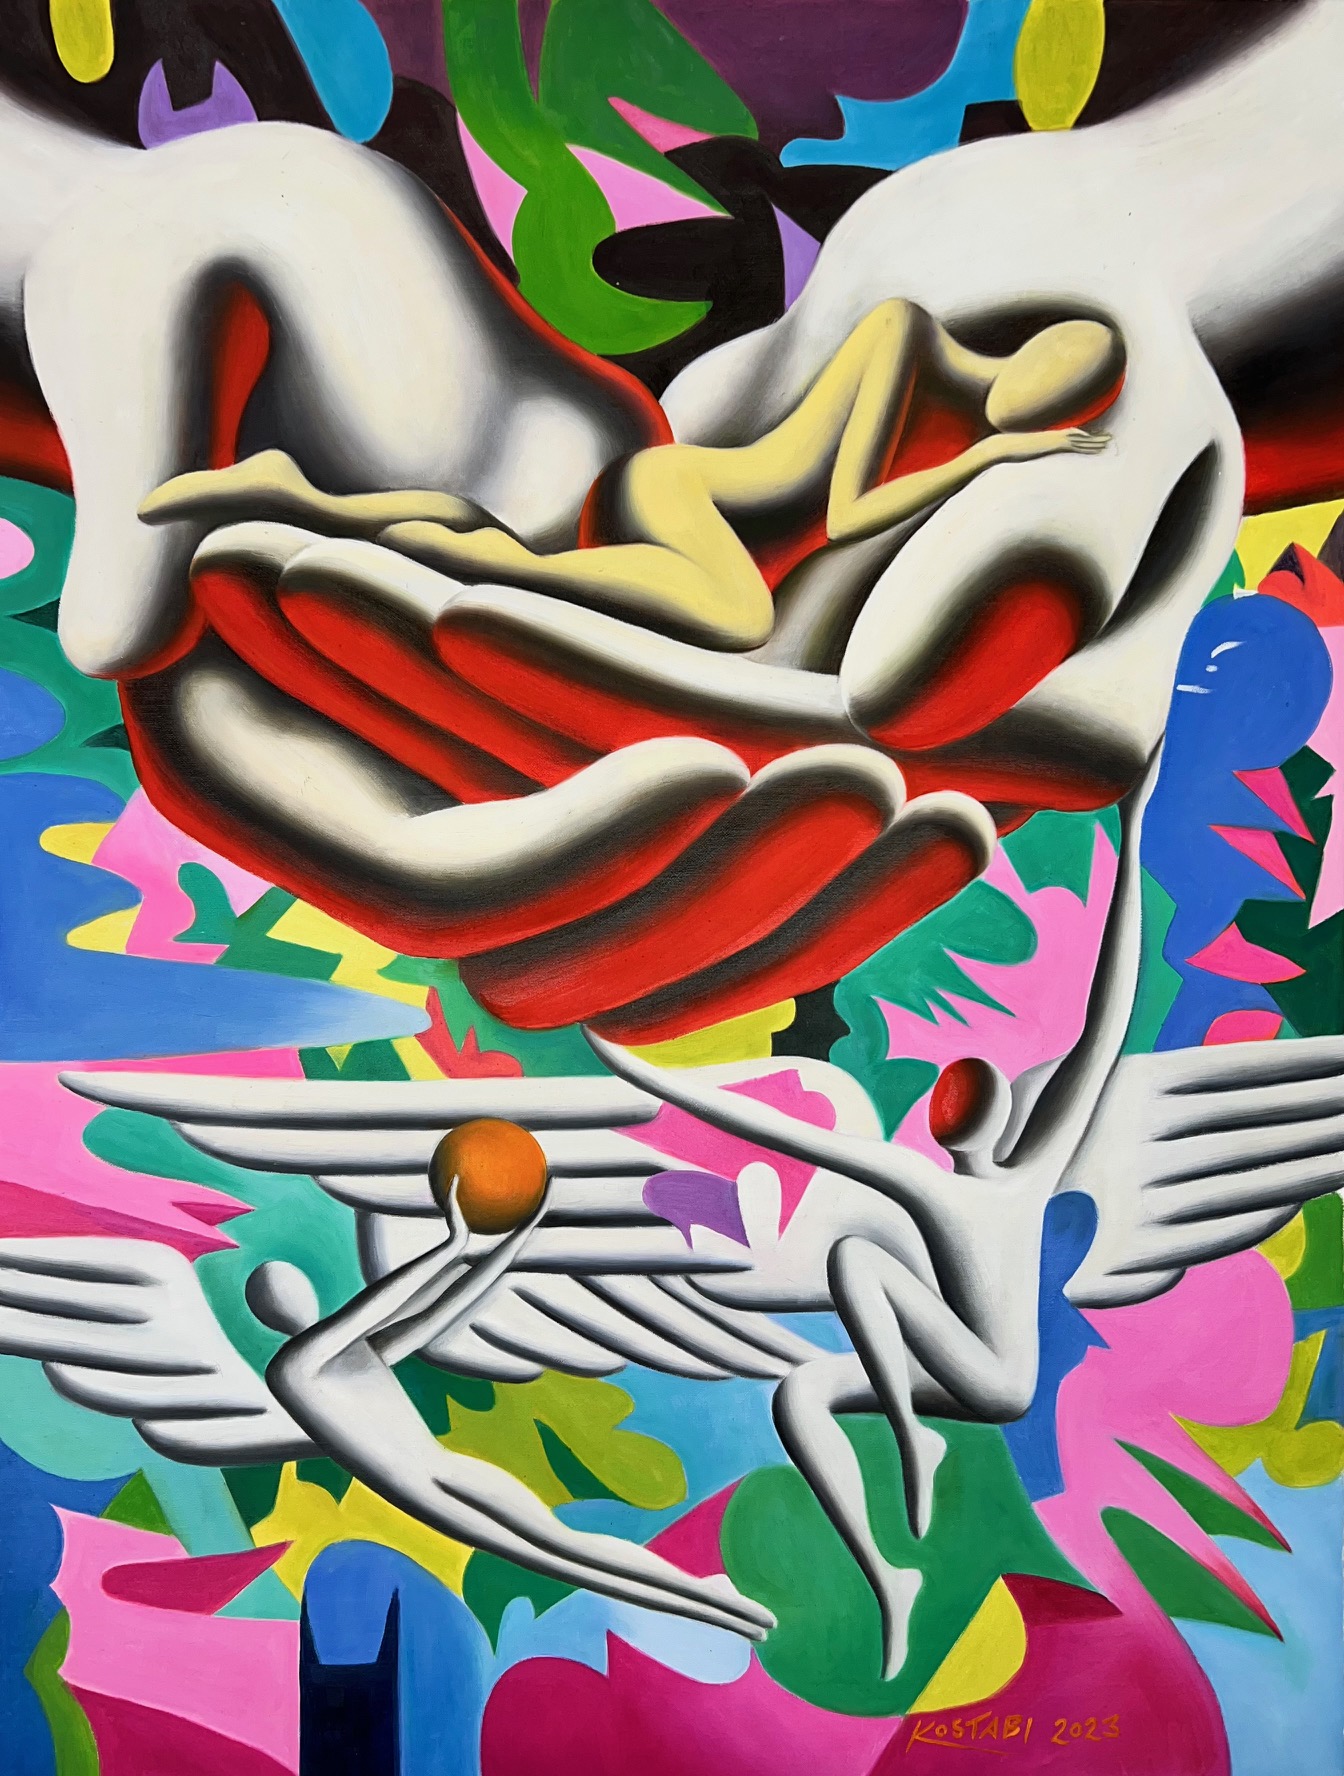 MARK KOSTABI - Sublime Celebration - Oil on Canvas - 24x32 inches